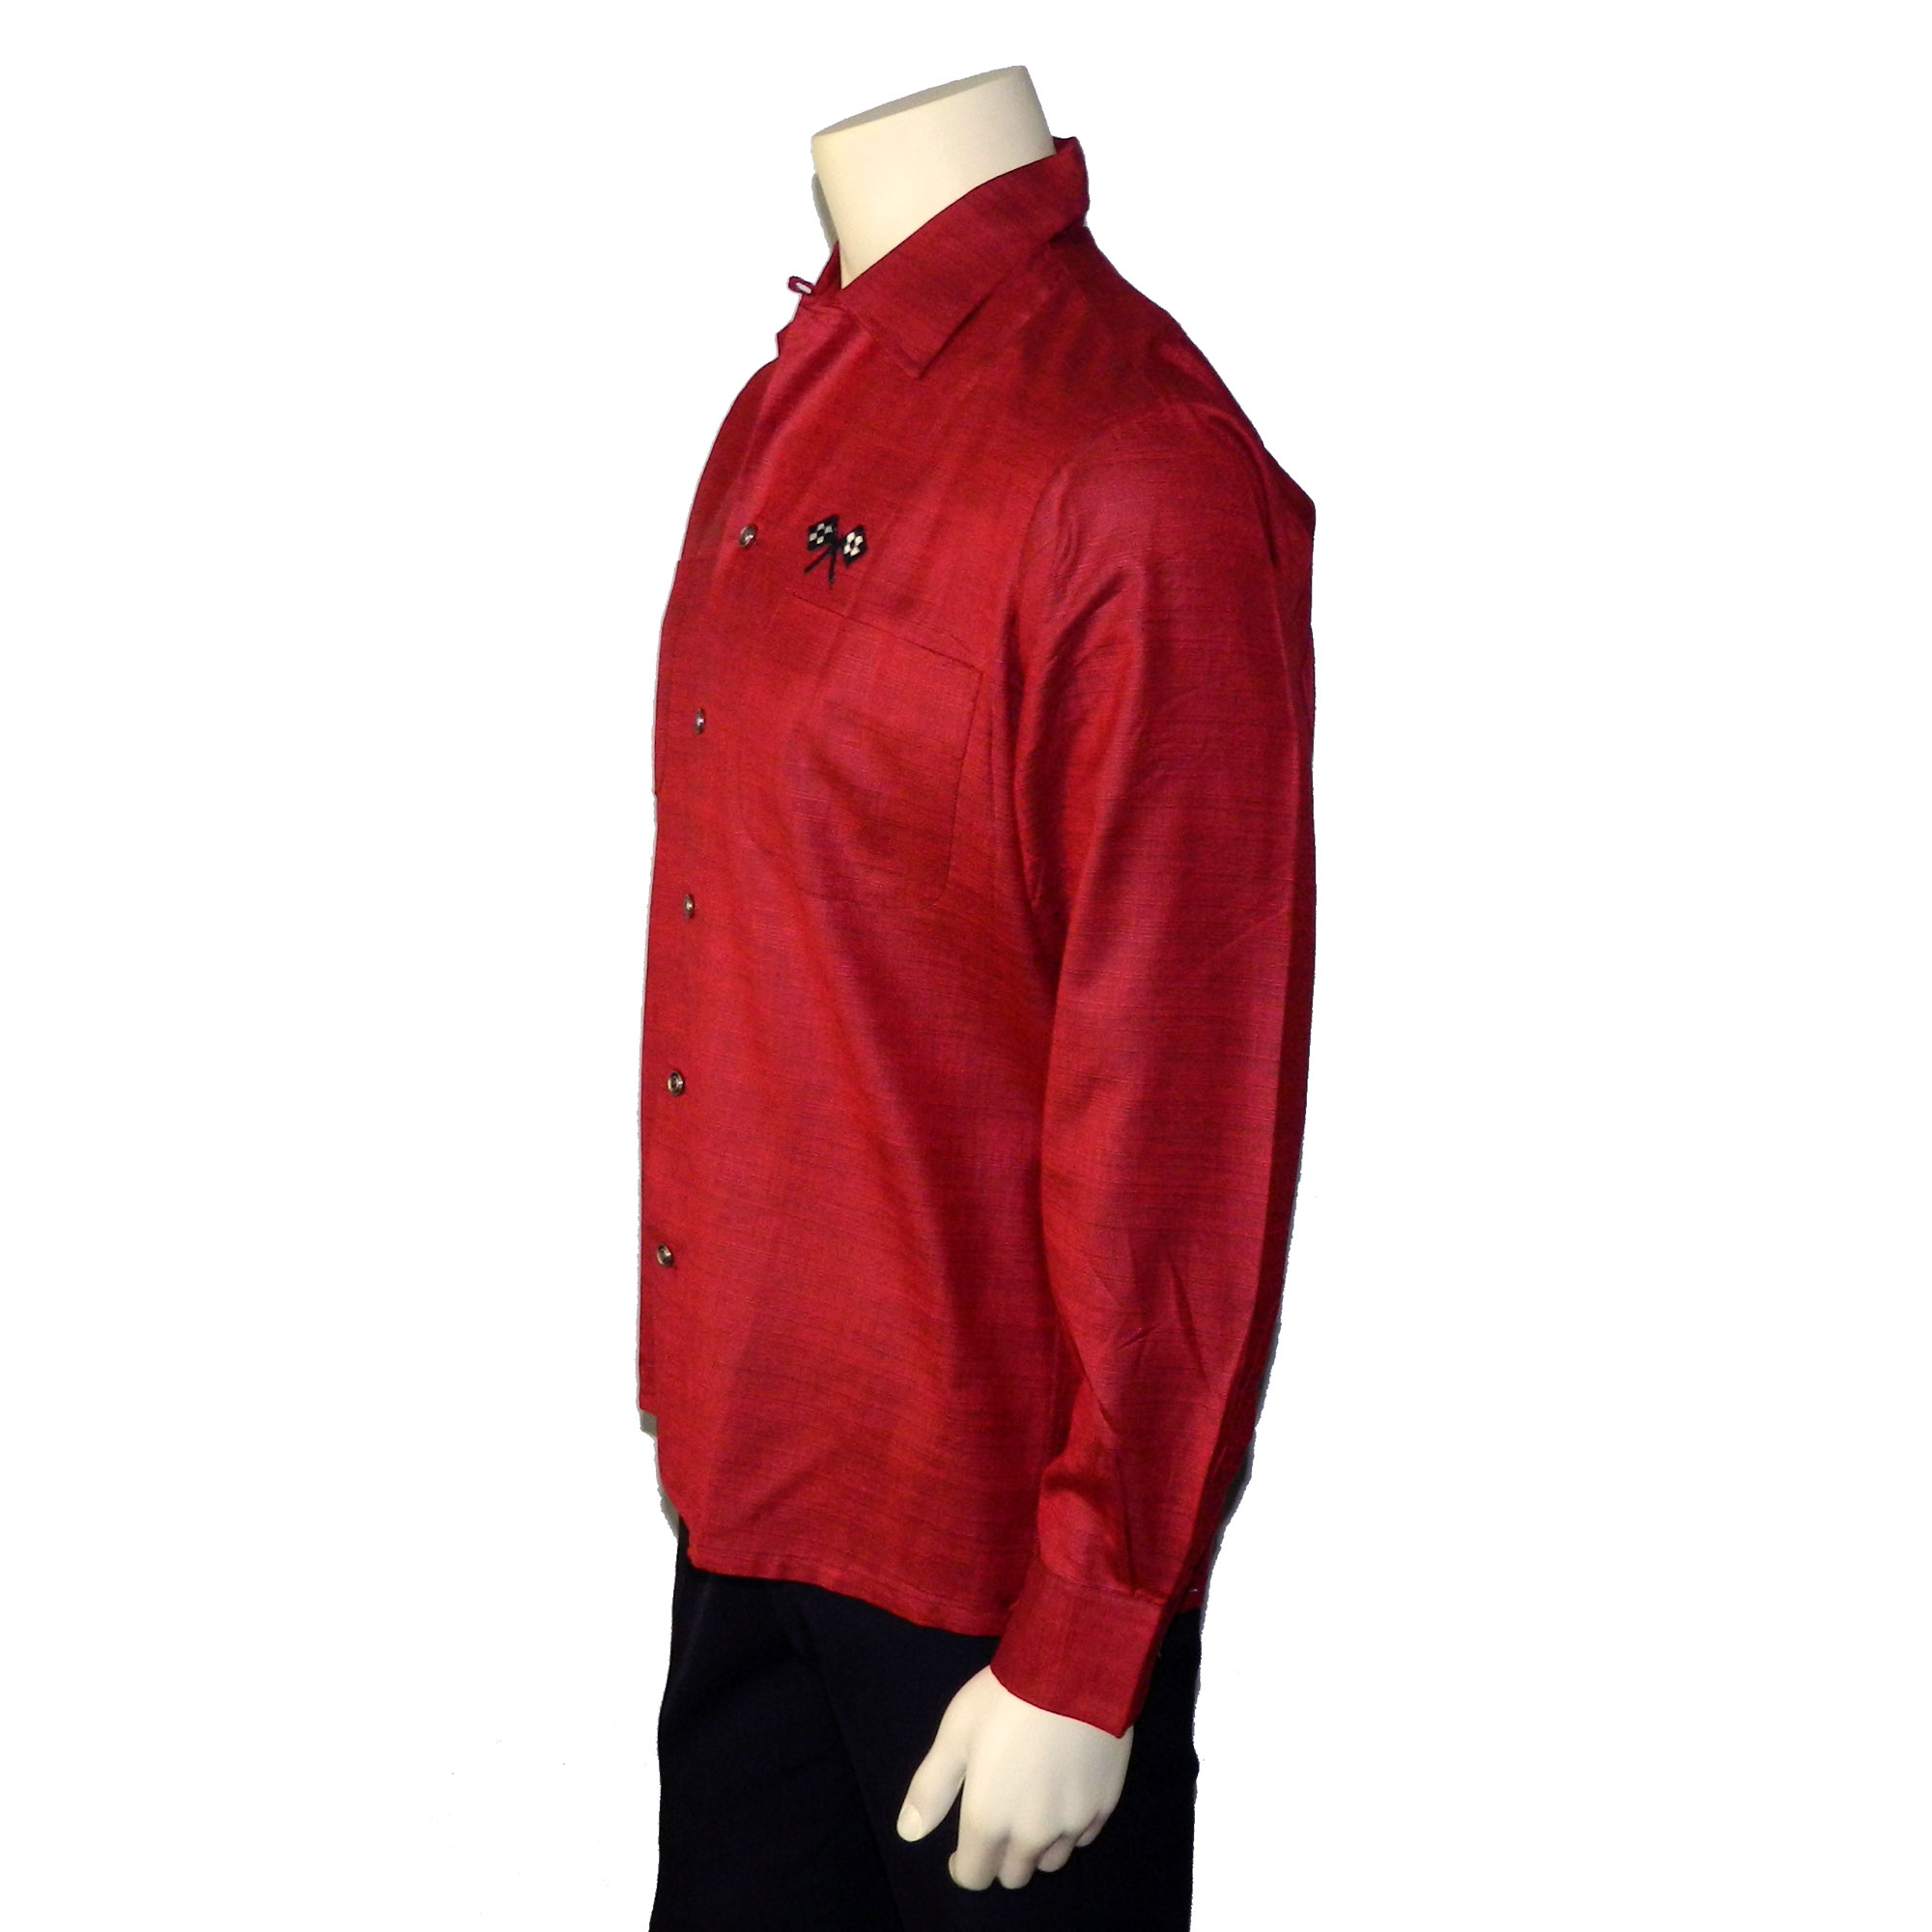 1950s maroon red rayon shirt